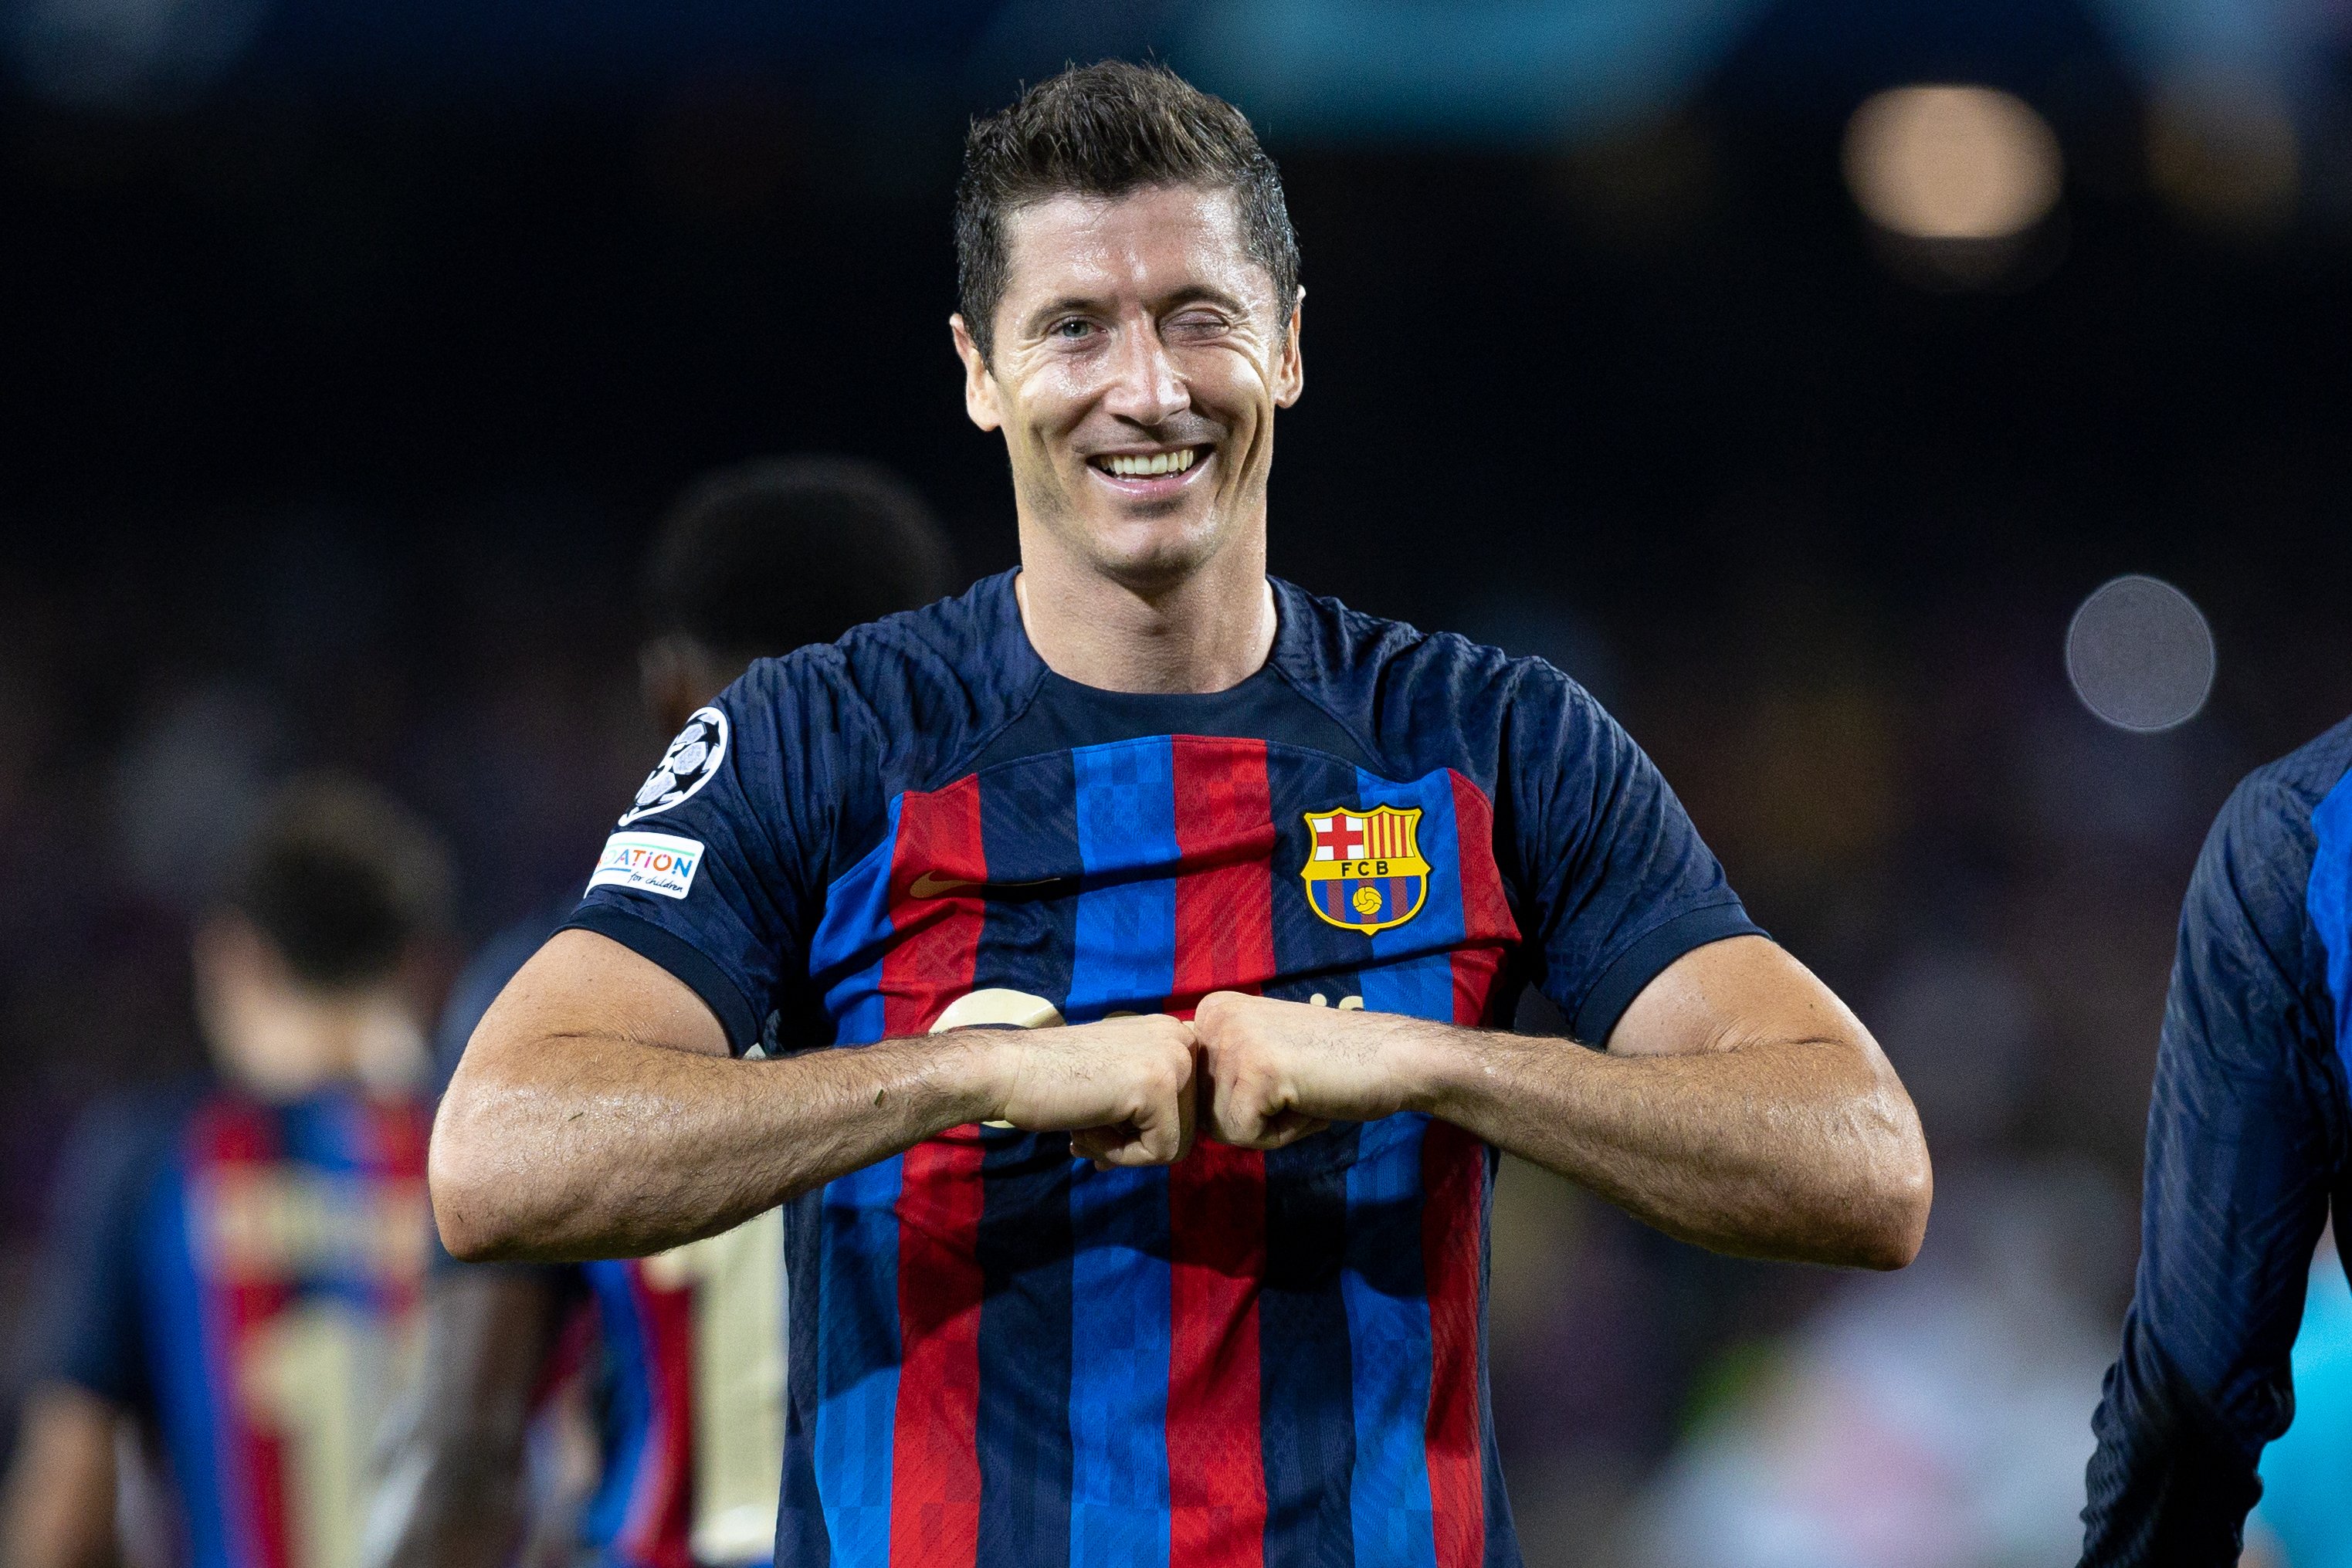 La nueva estrella del Barça, Robert Lewandowski, un hombre récord consagrado